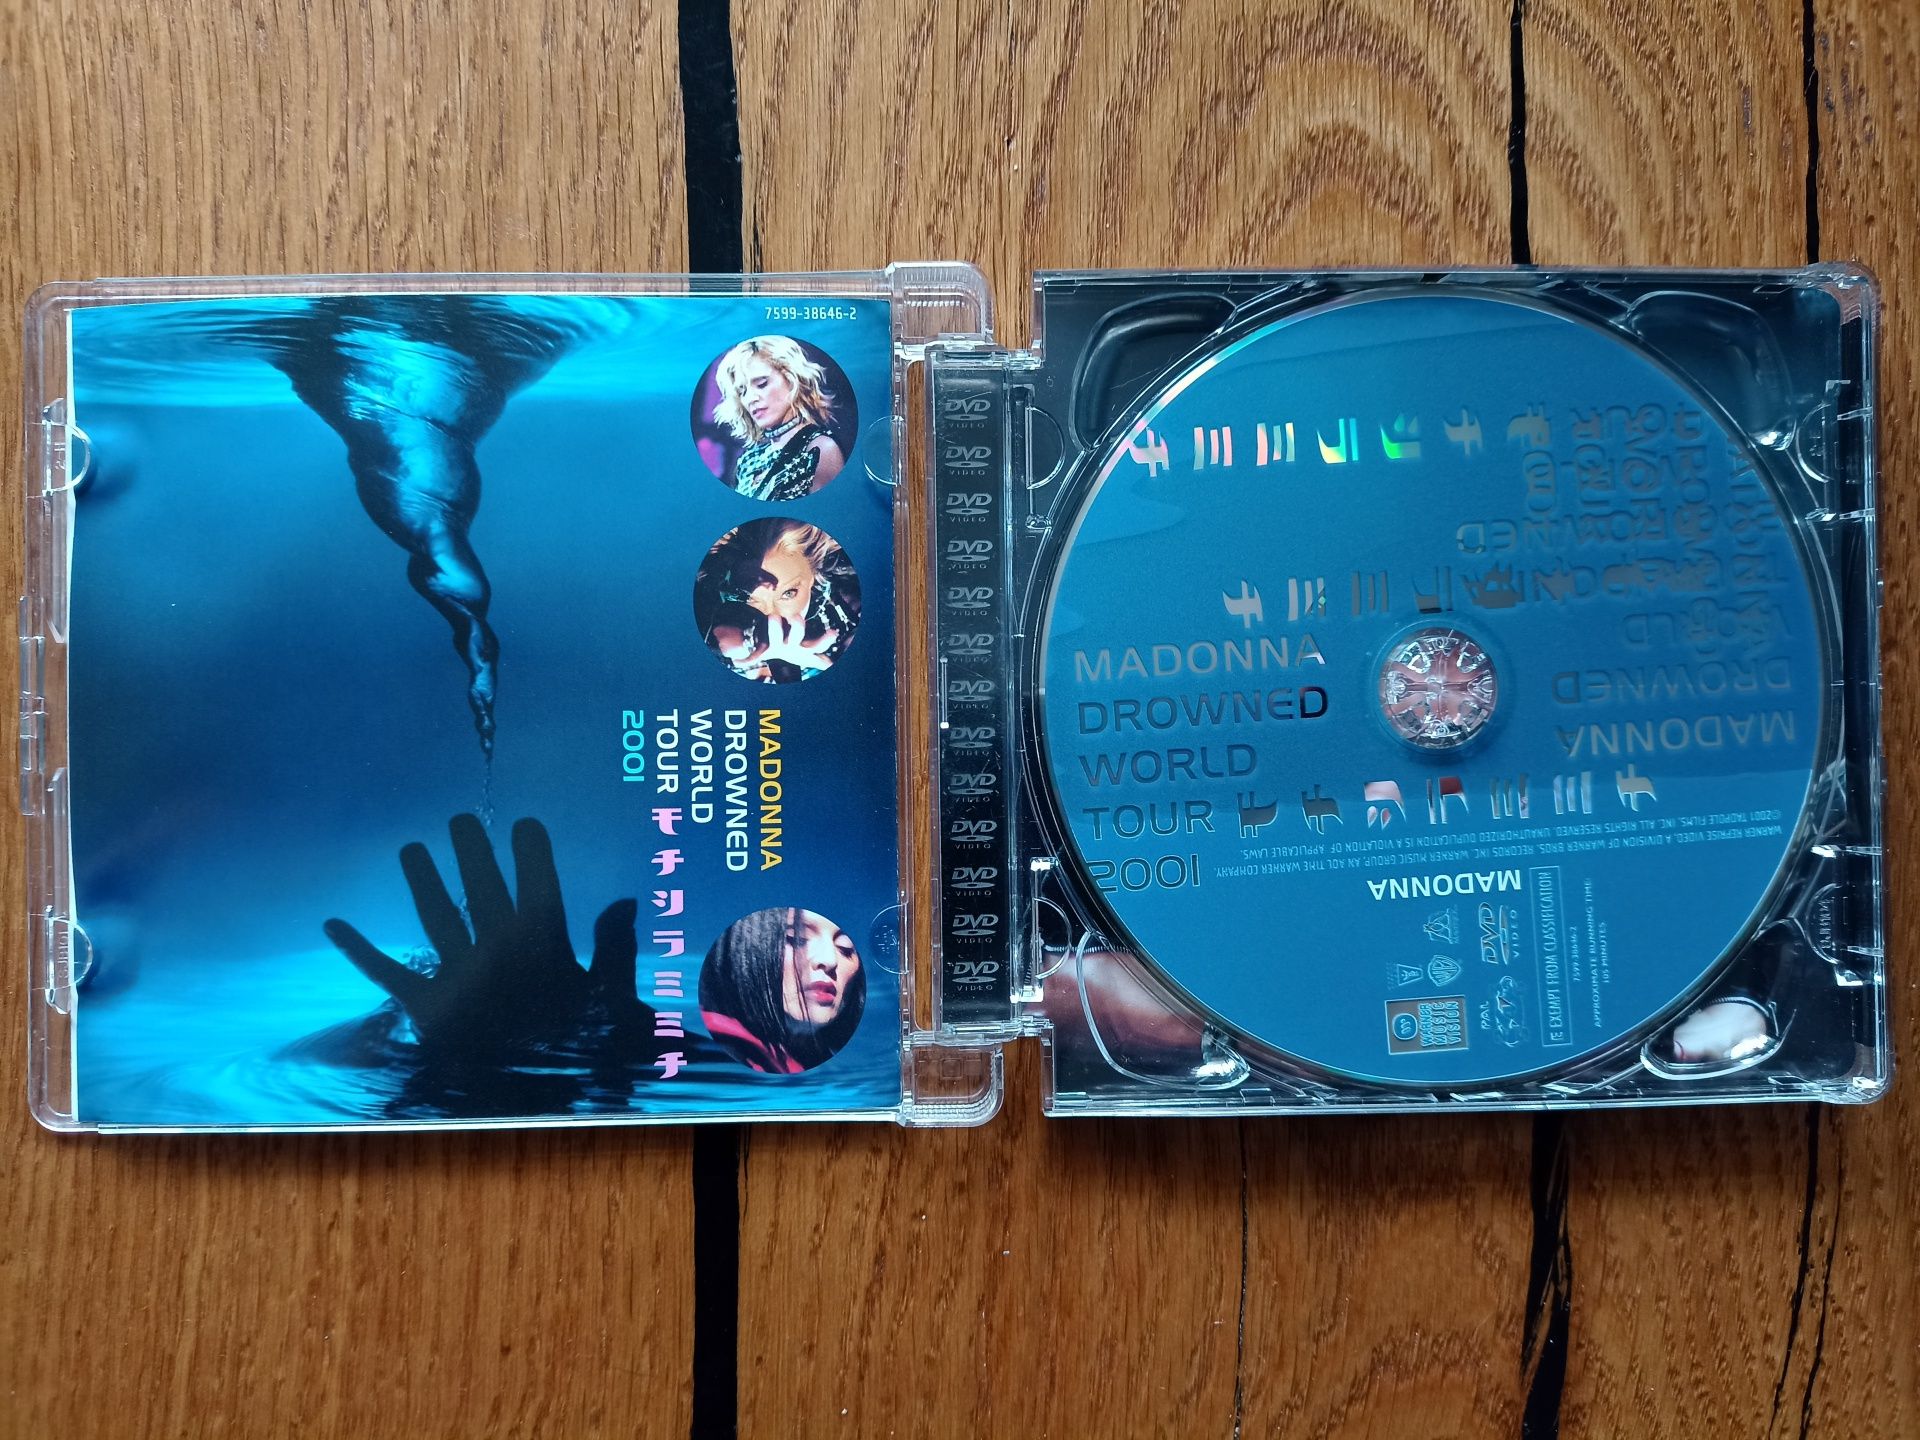 Фірмовий DVD Madonna Drowned World Tour 2001 (Warner)